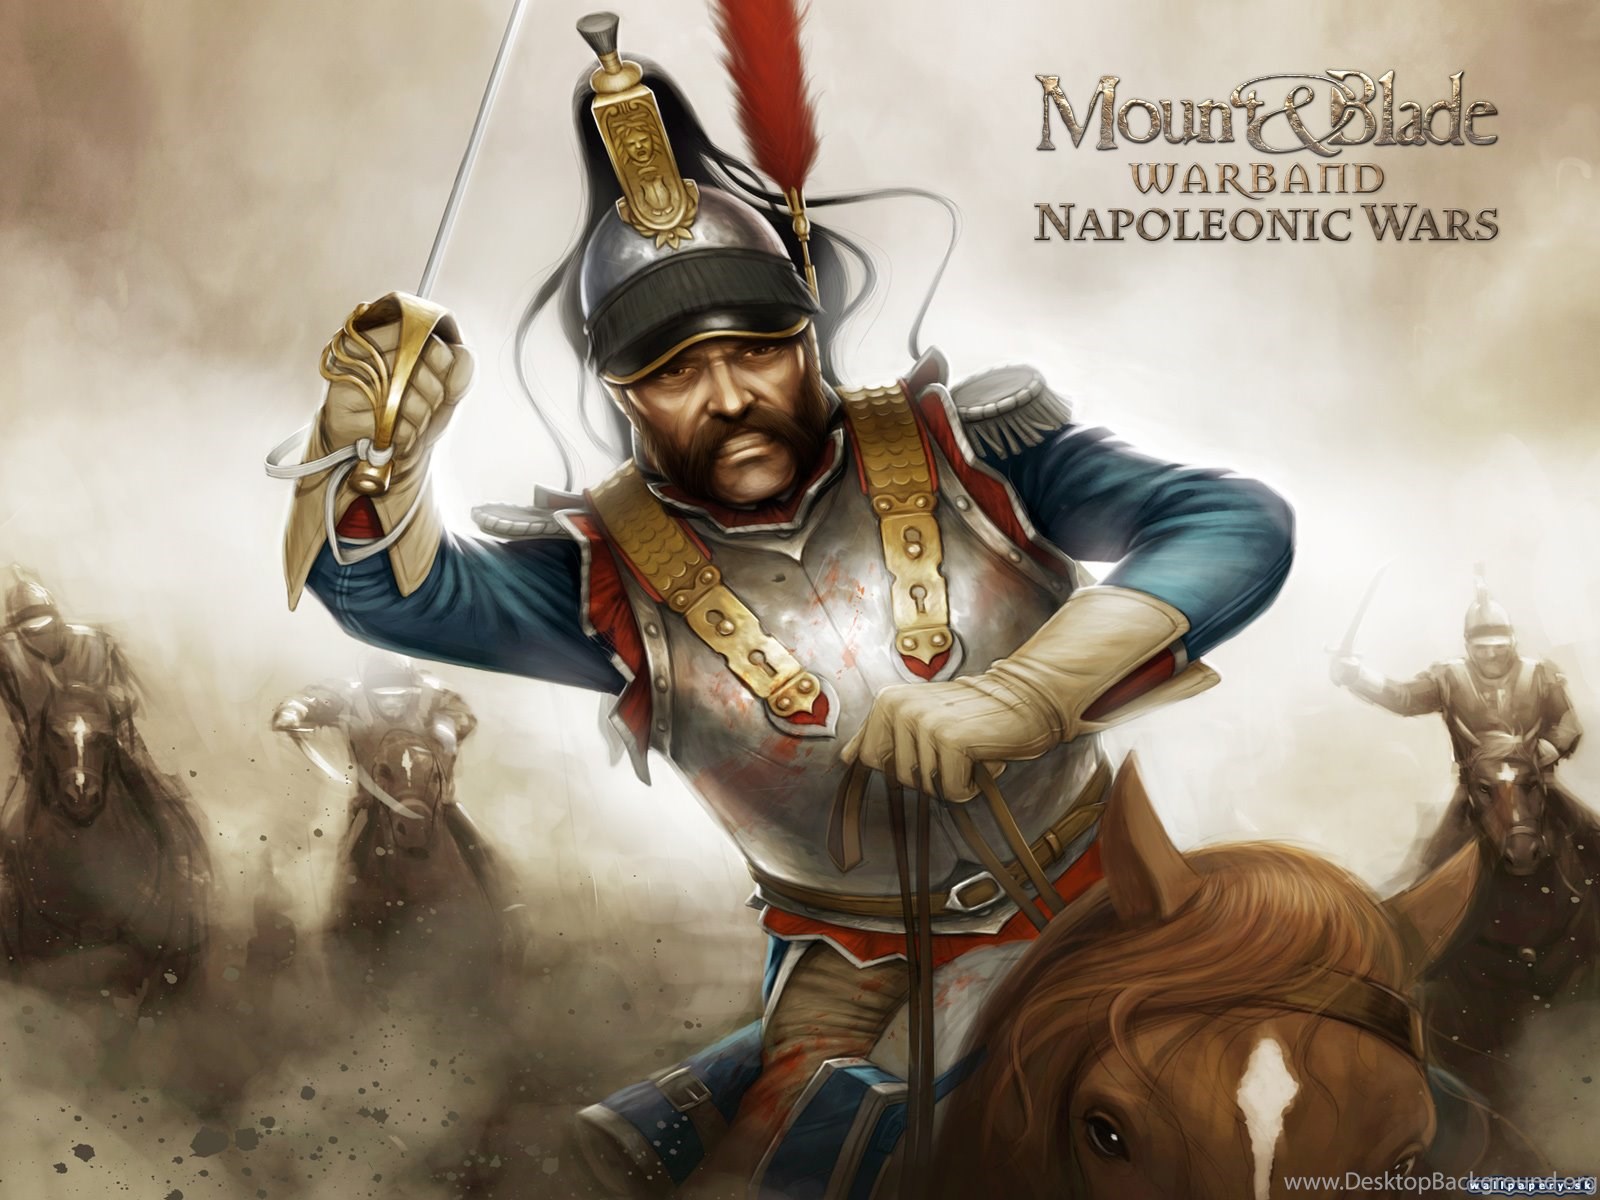 Napoleonic Wars Wallpaper Image Desktop Background